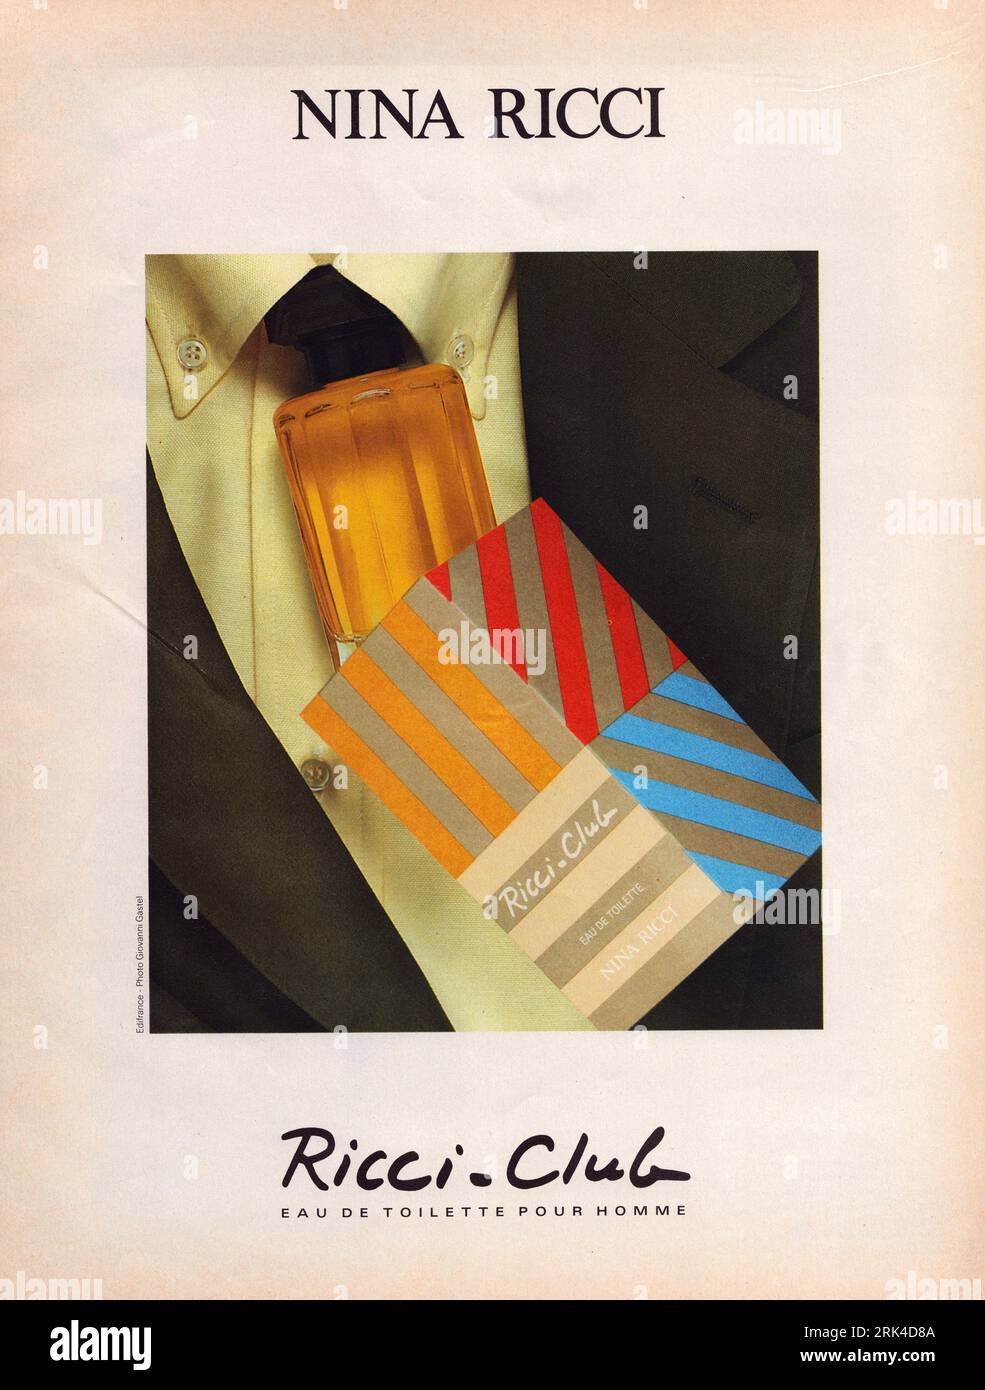 Nina Ricci Eau de Toilette Pour Homme Ricci Club Nina Ricci Perfumes advrtisement Nina Ricci commercial Stock Photo